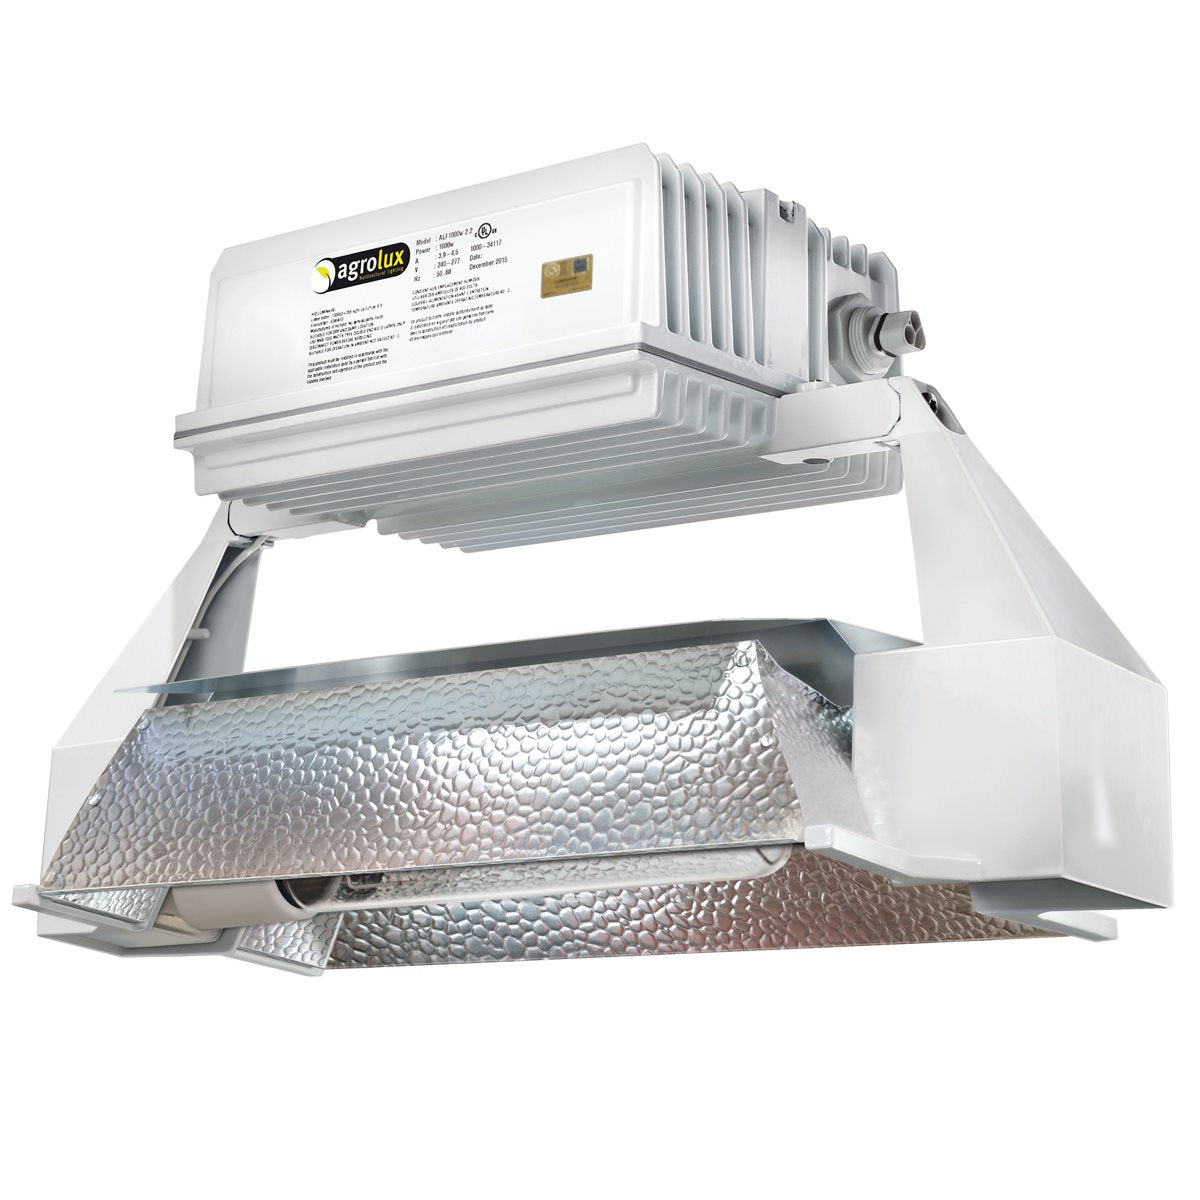 Agrolux ALF600 240-400V W / Philips Lamp